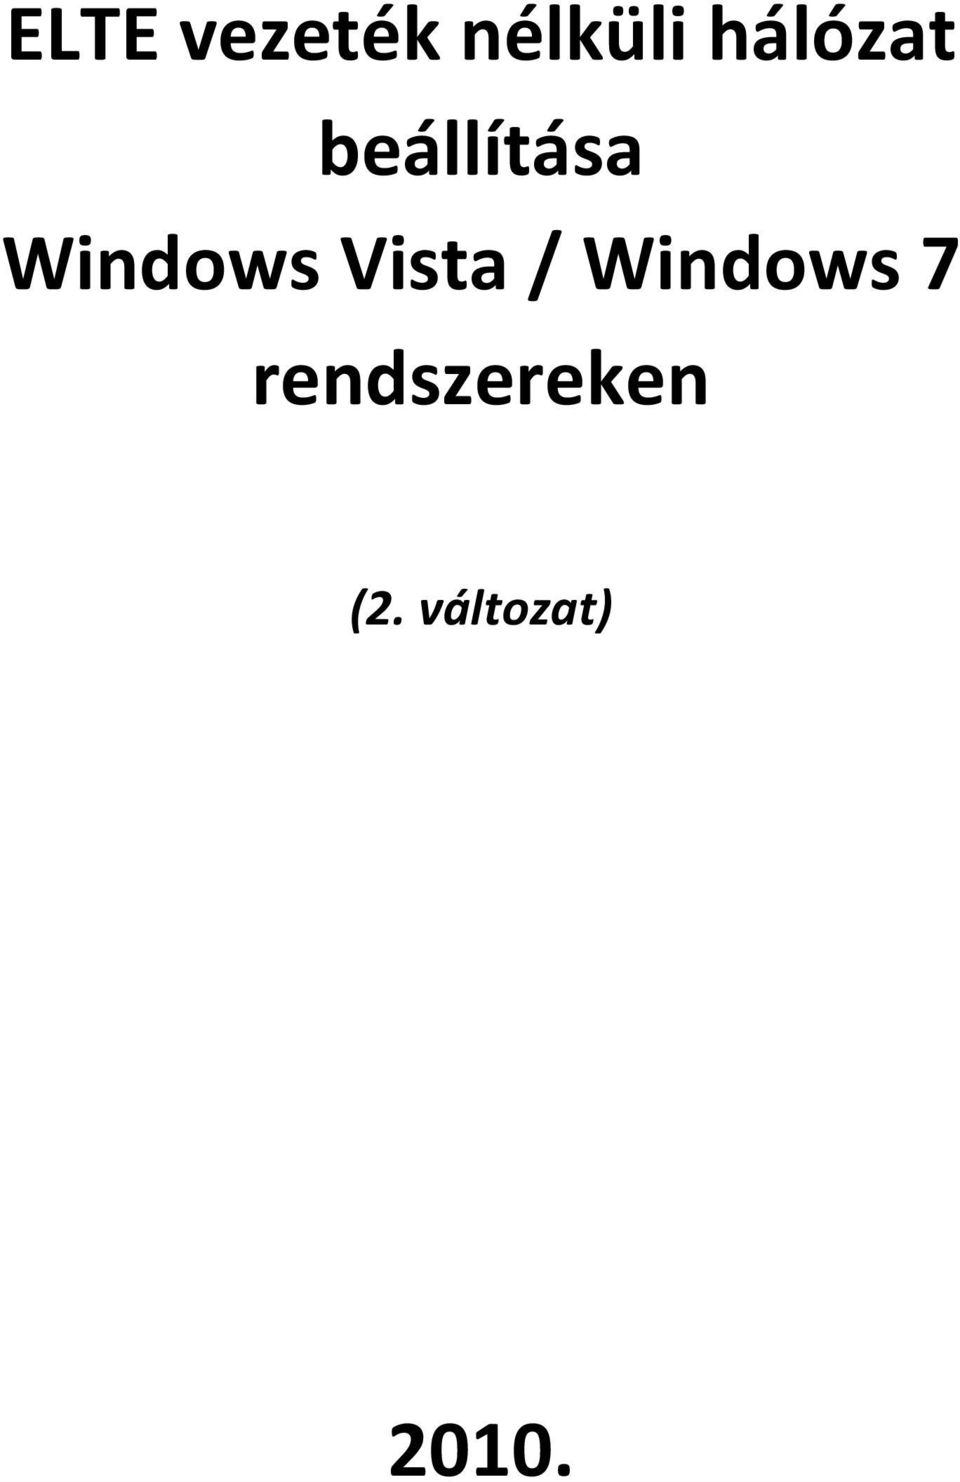 Windows Vista / Windows